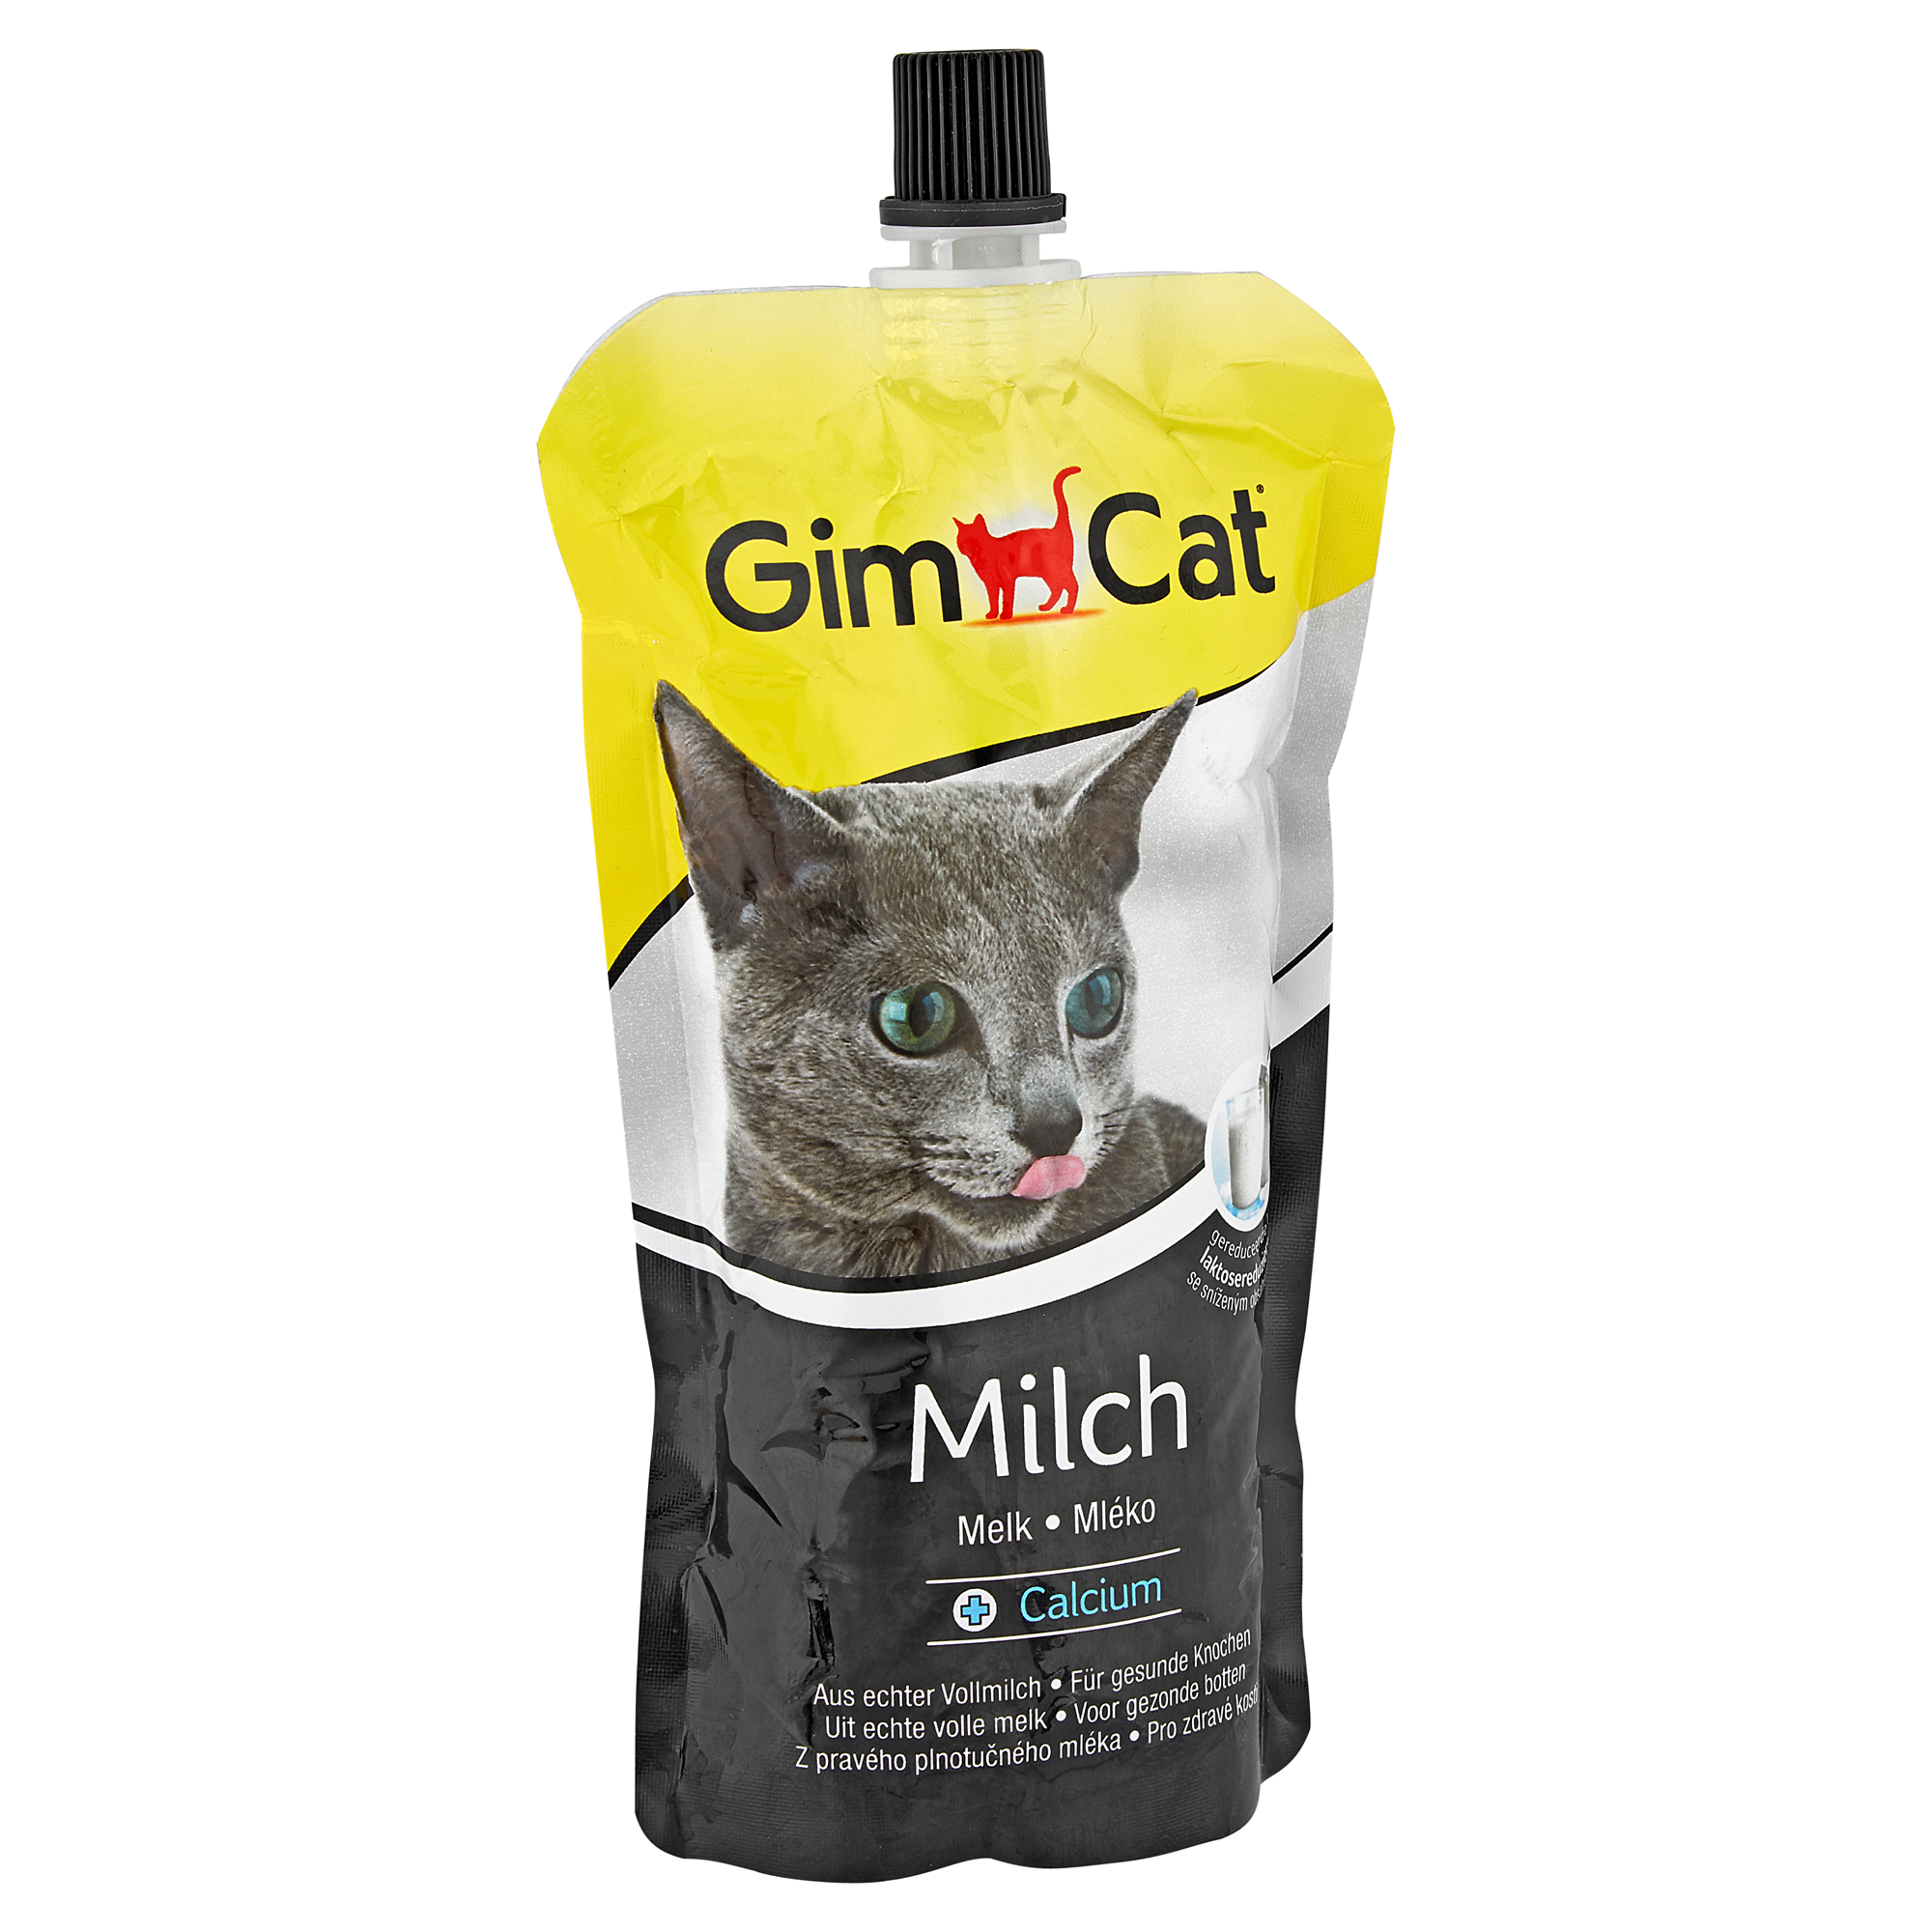 Katzenmilch mit Calcium 200 ml + product picture